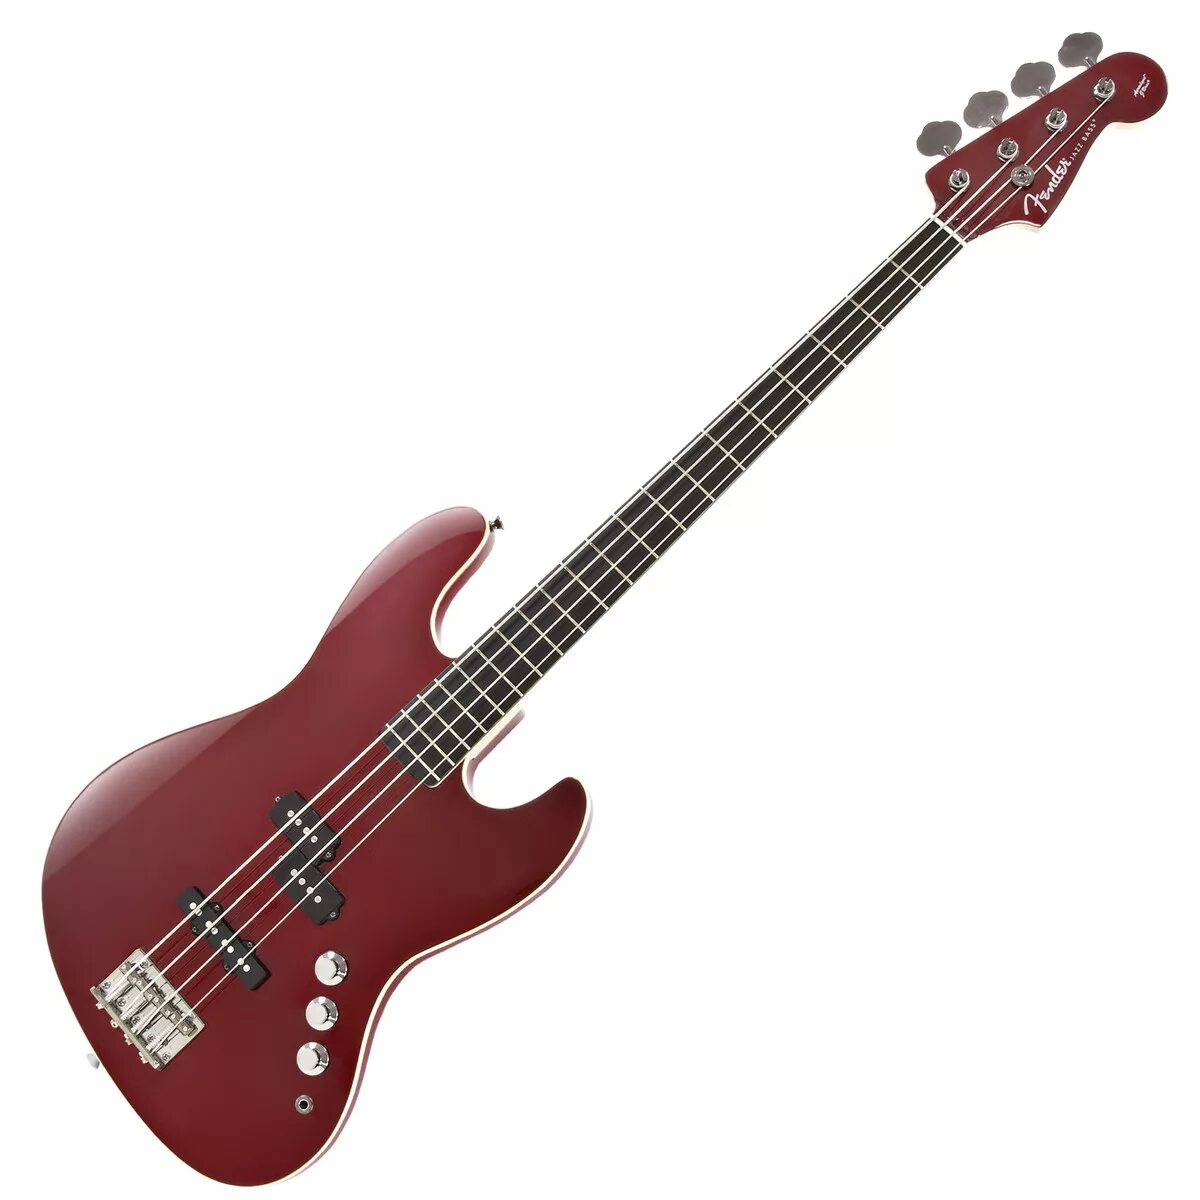 Bass special. Бас-гитара Fender Aerodyne Jazz Bass. Fender Jazz Bass Special PJ-555. Fender Japan Jazz Bass Candy Red. Бас гитара Фендер джаз бас спешл 555.